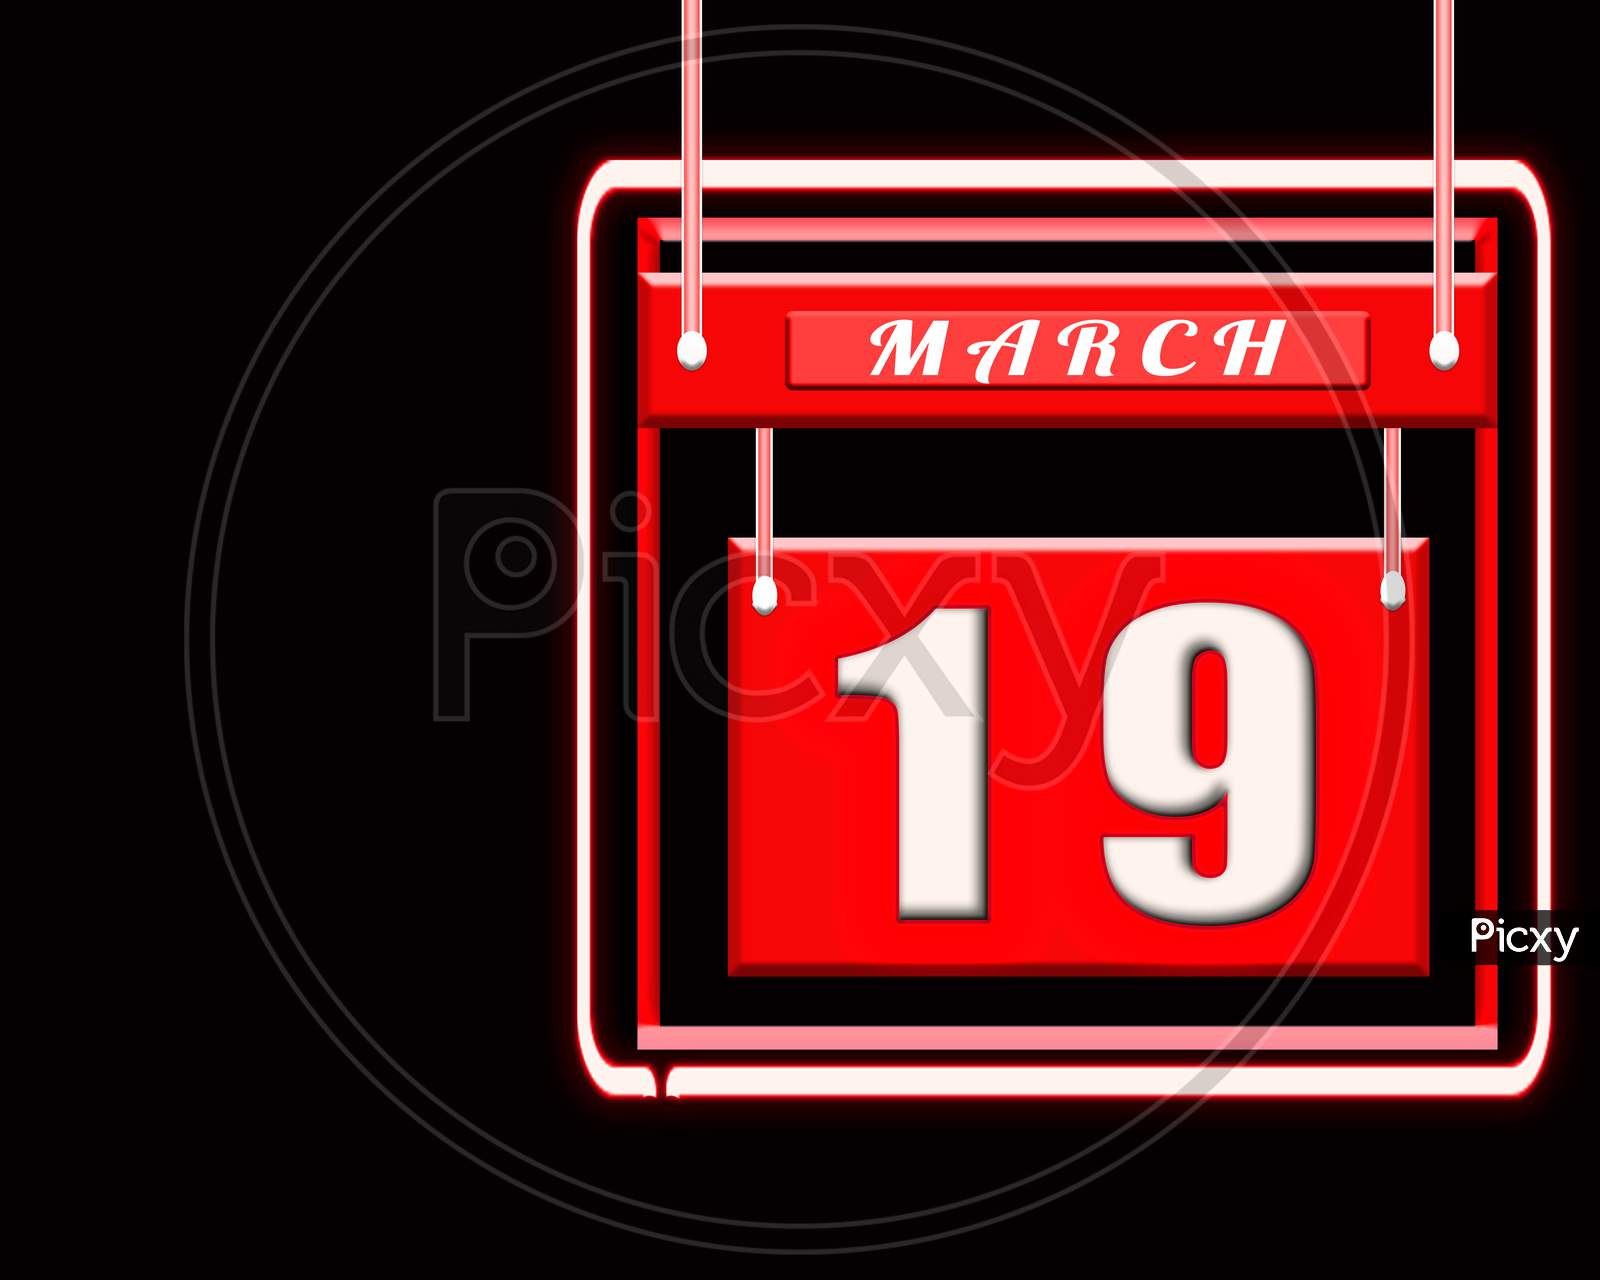 19 March, Red Calendar On Black Backgrand